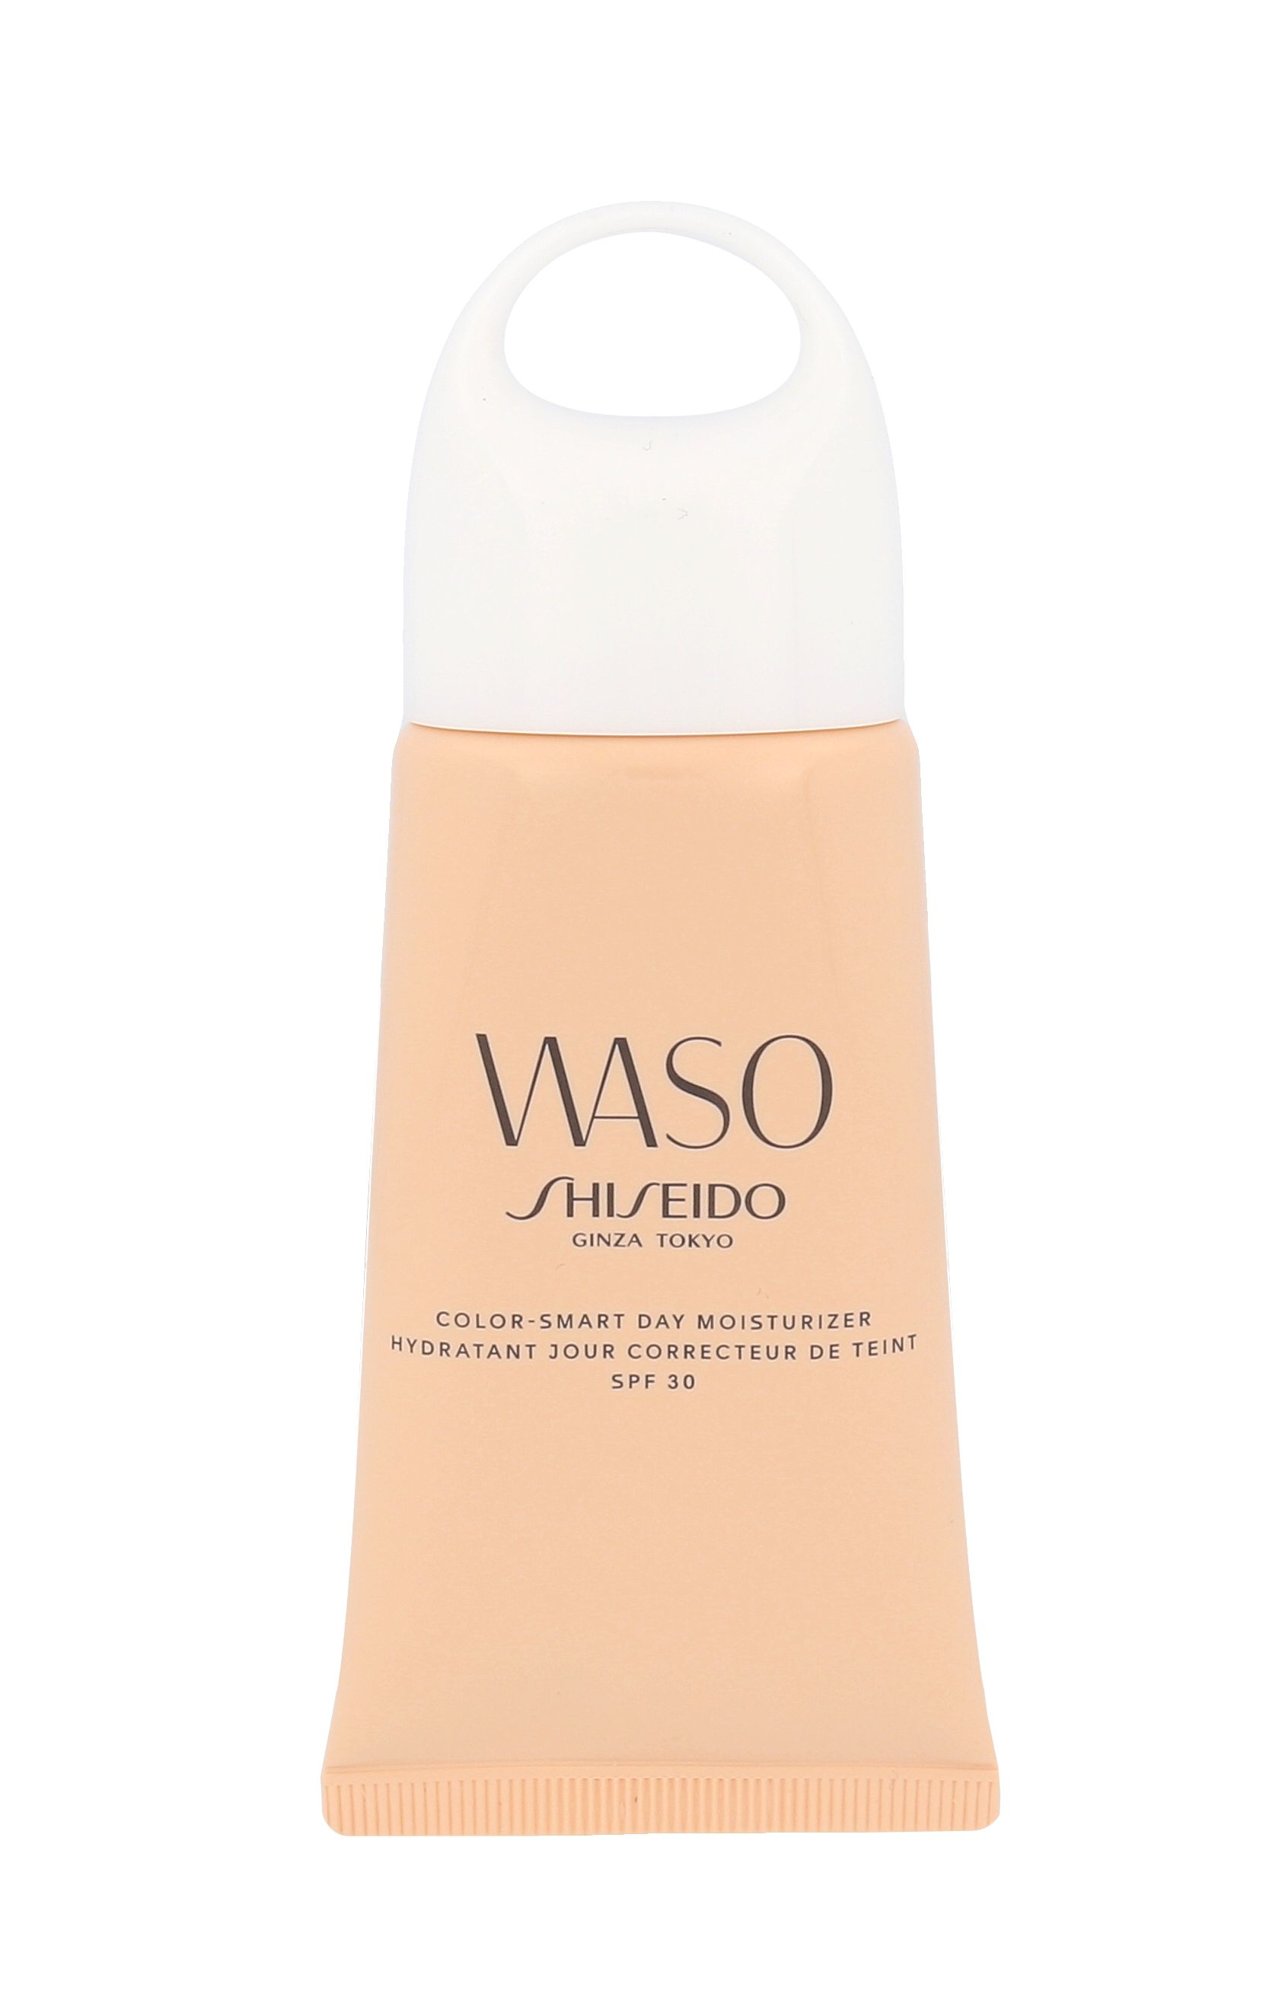 Shiseido Waso Color-Smart Day Moisturizer SPF30